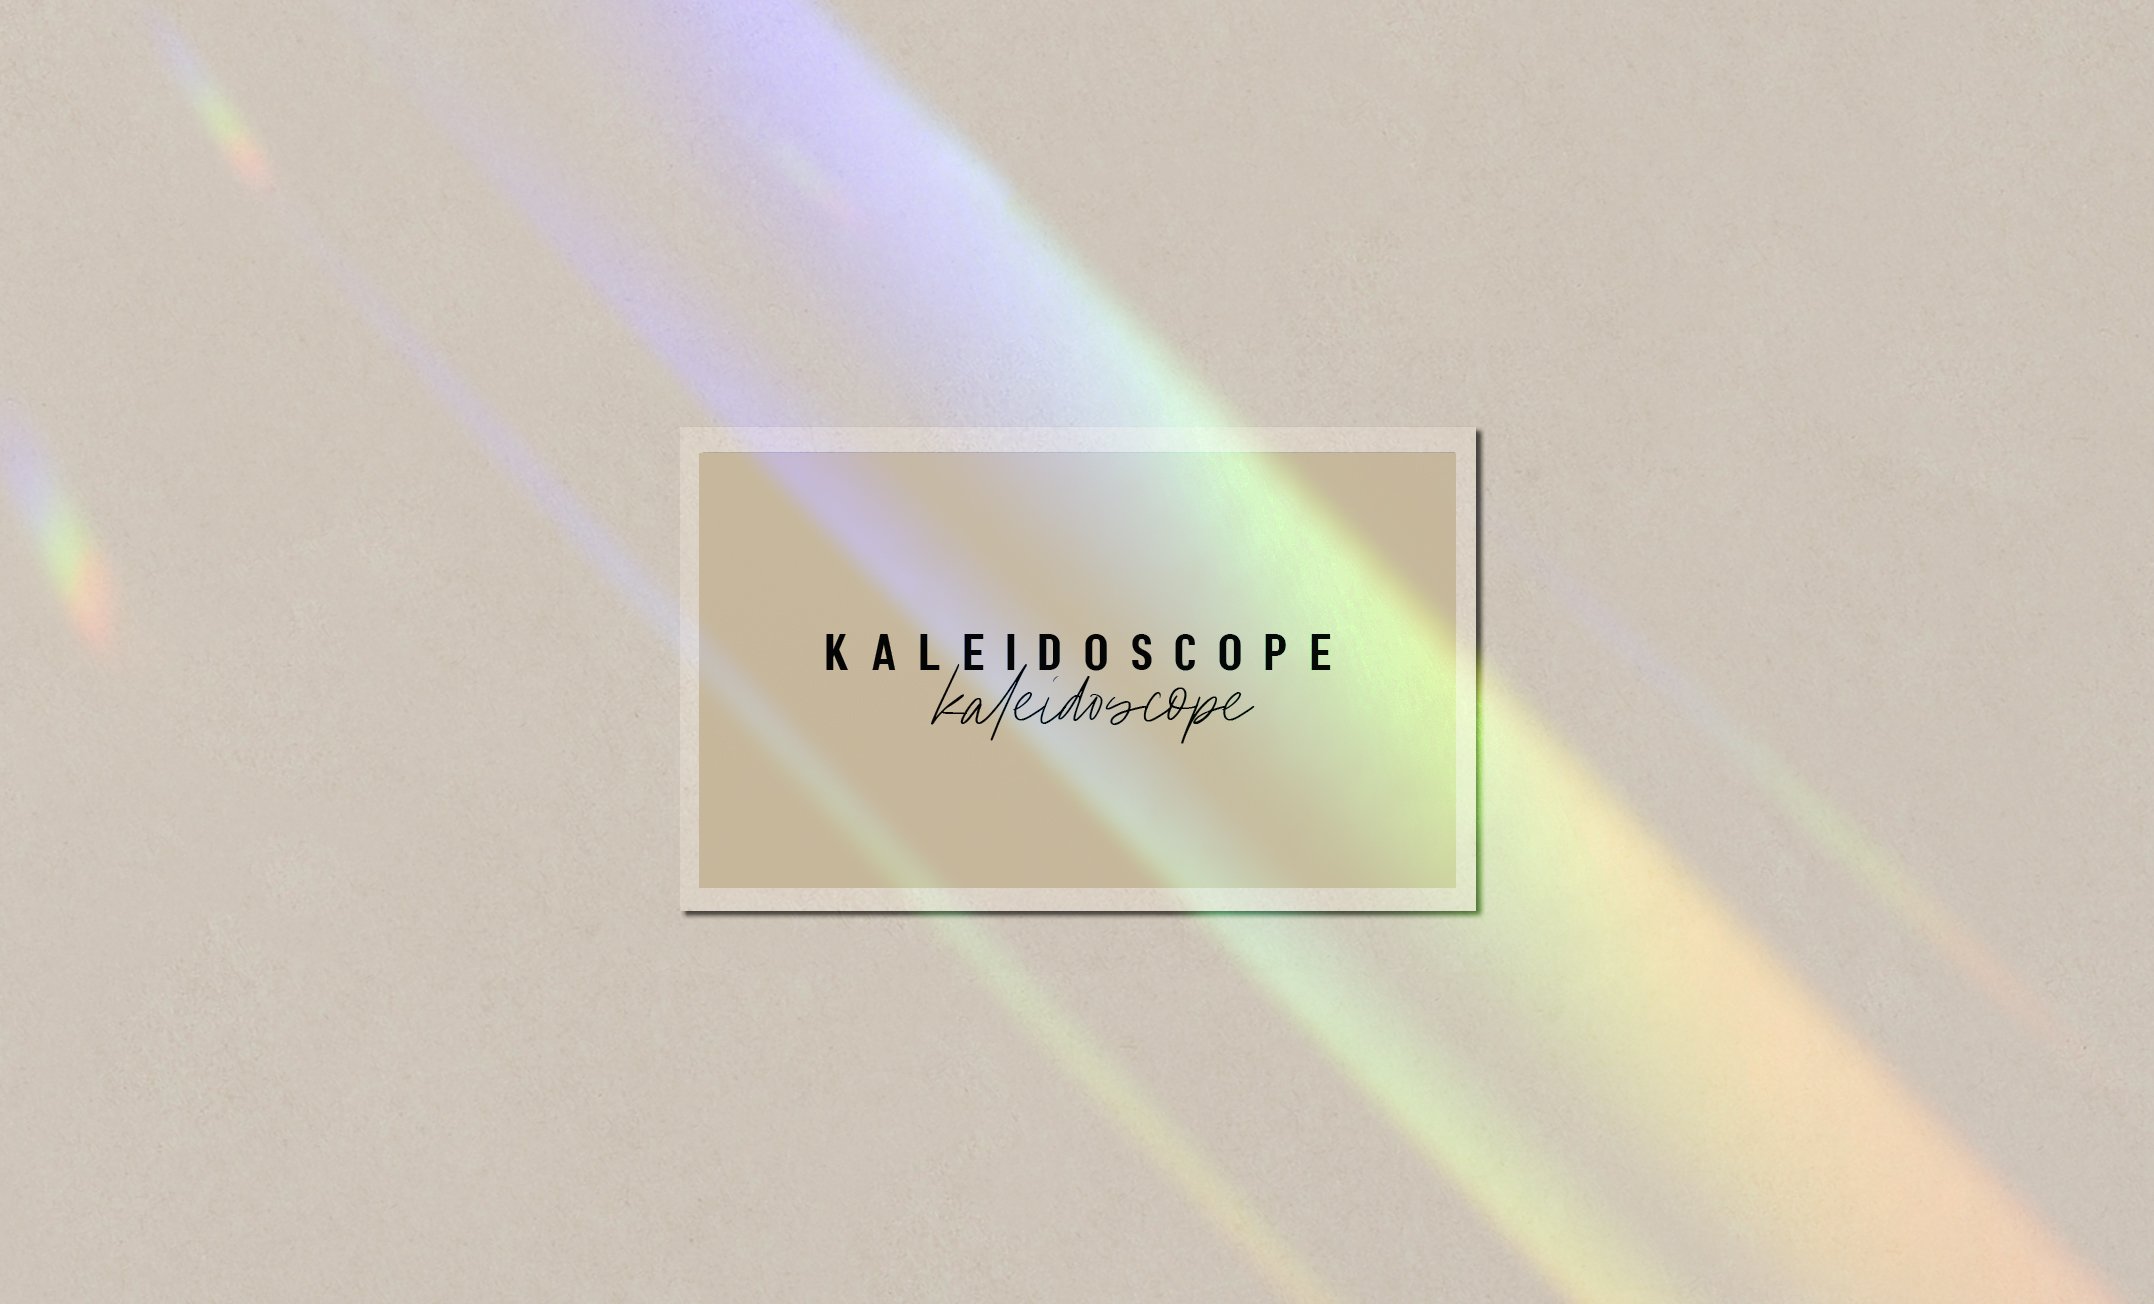 Kaleidoscope | Rainbow Prism Overlaypreview image.